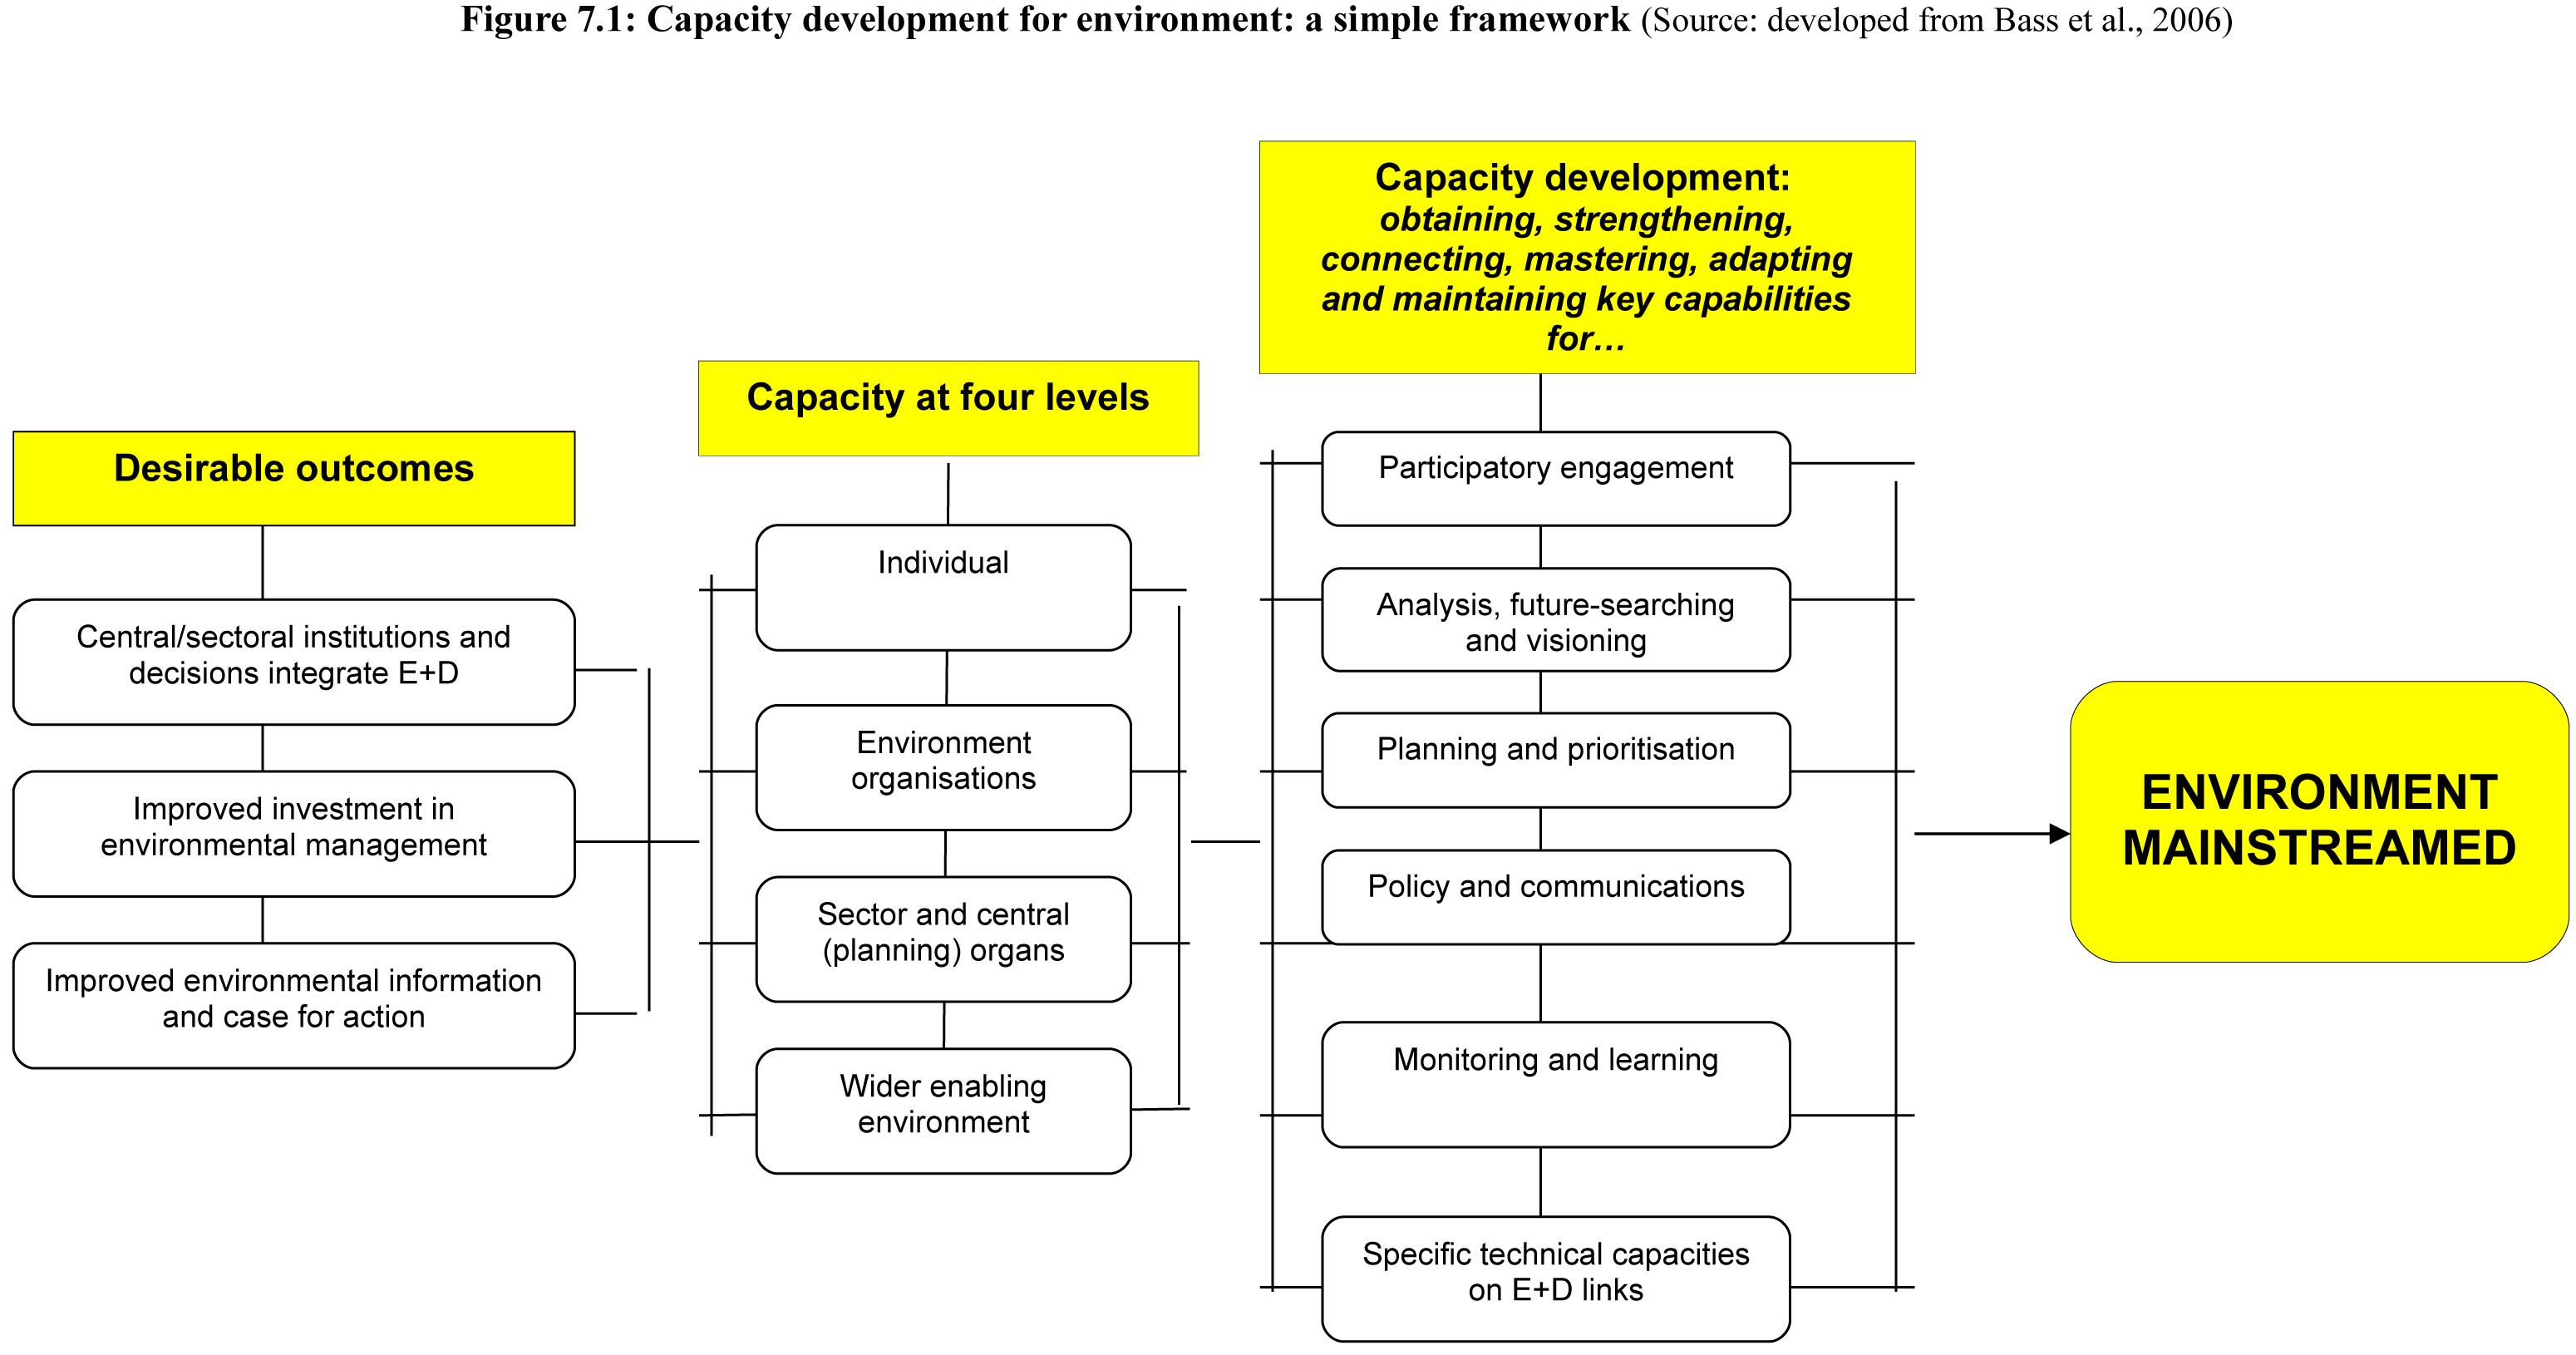 Capacity development for environment: a simple framework